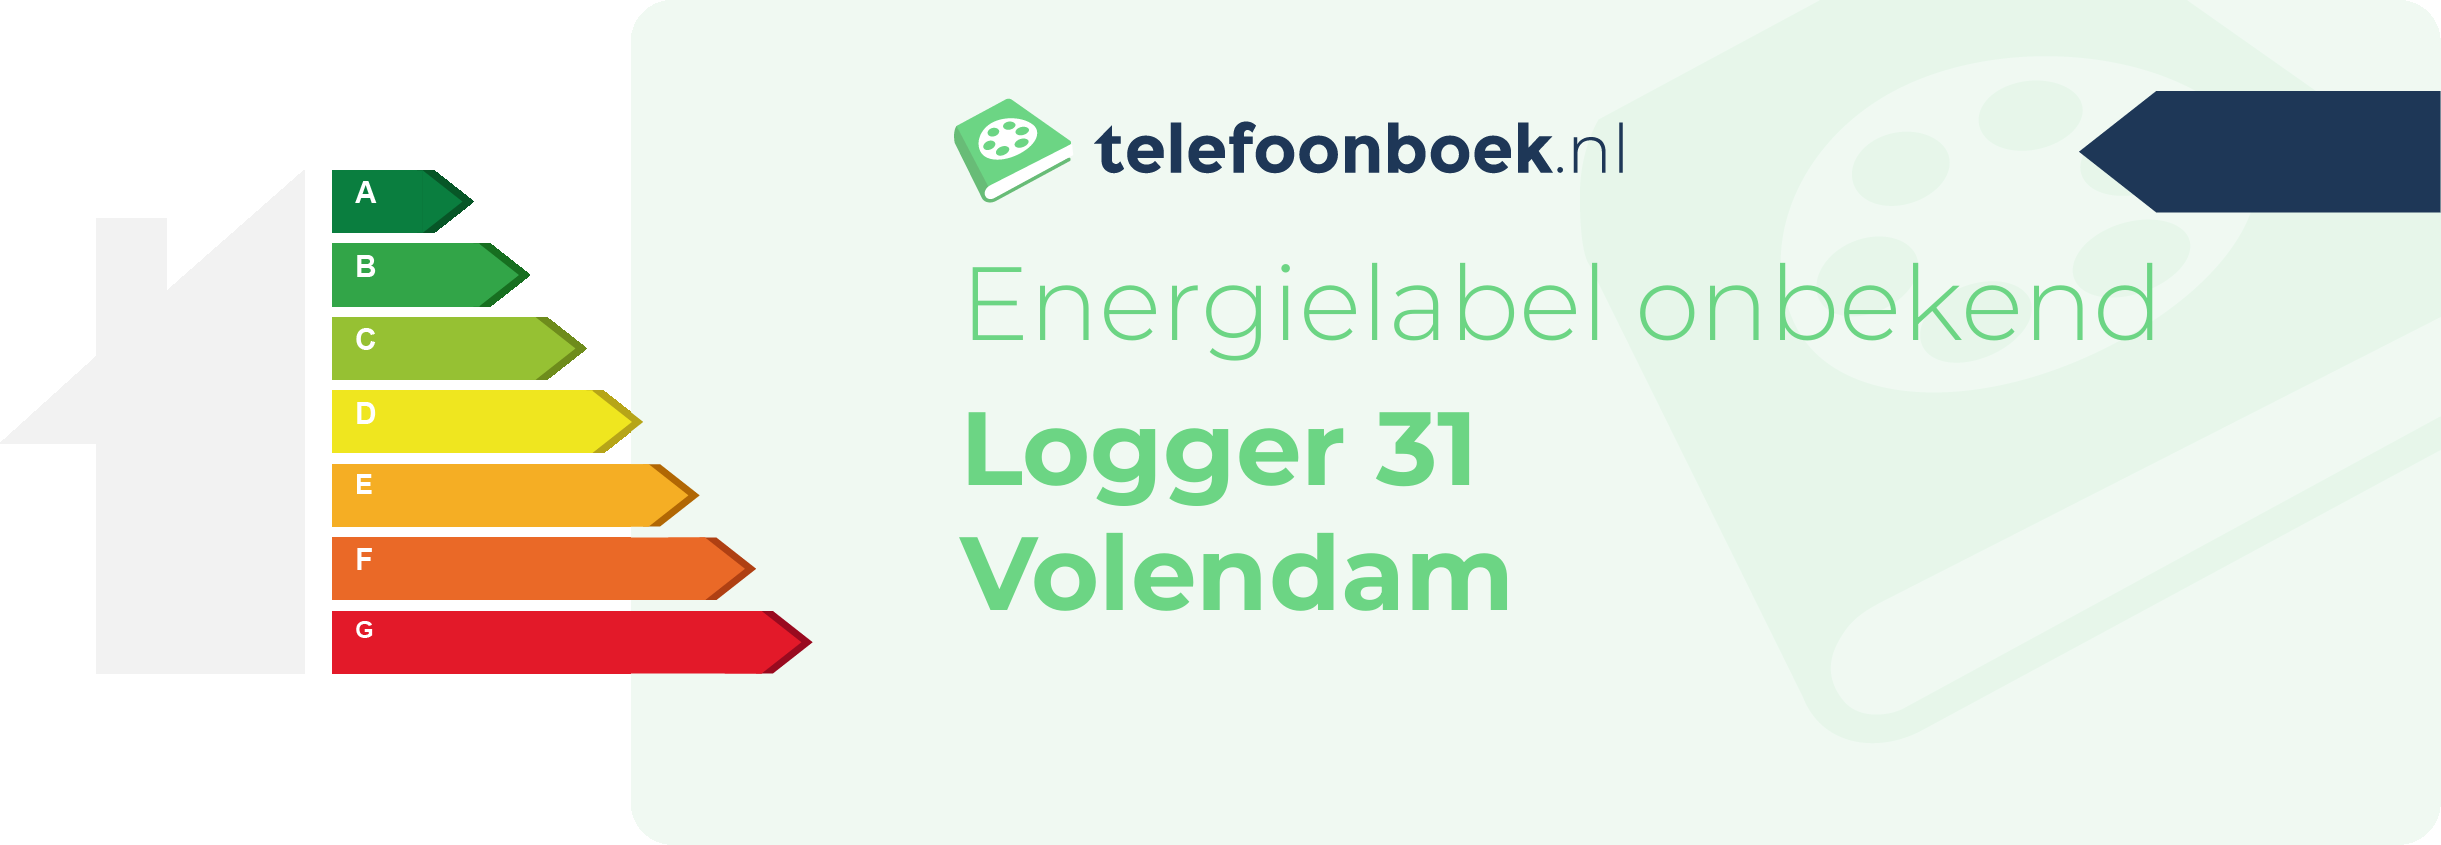 Energielabel Logger 31 Volendam